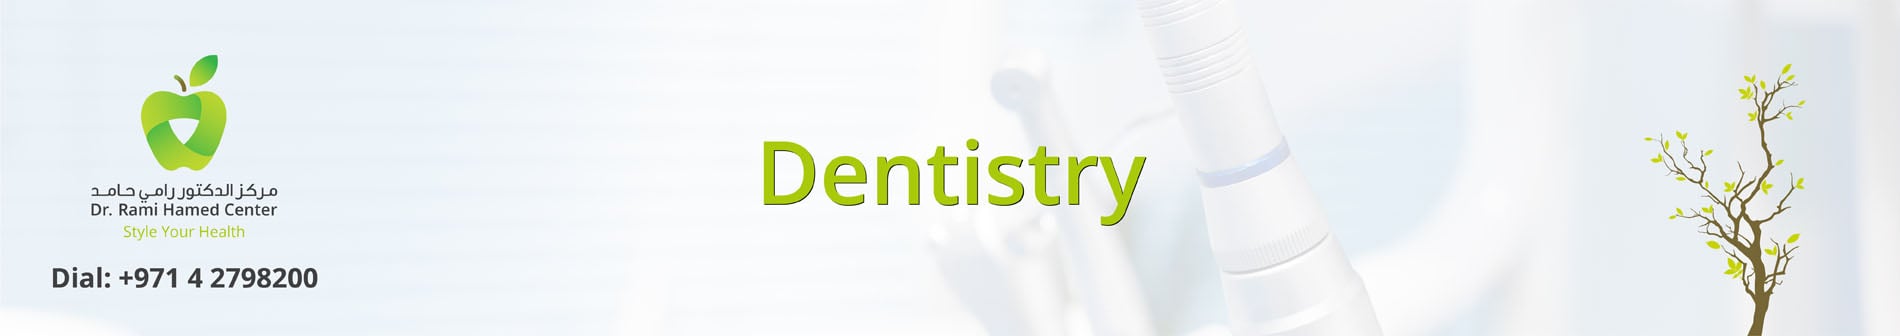 Dental Clinic in Dubai - Digital Smile Design